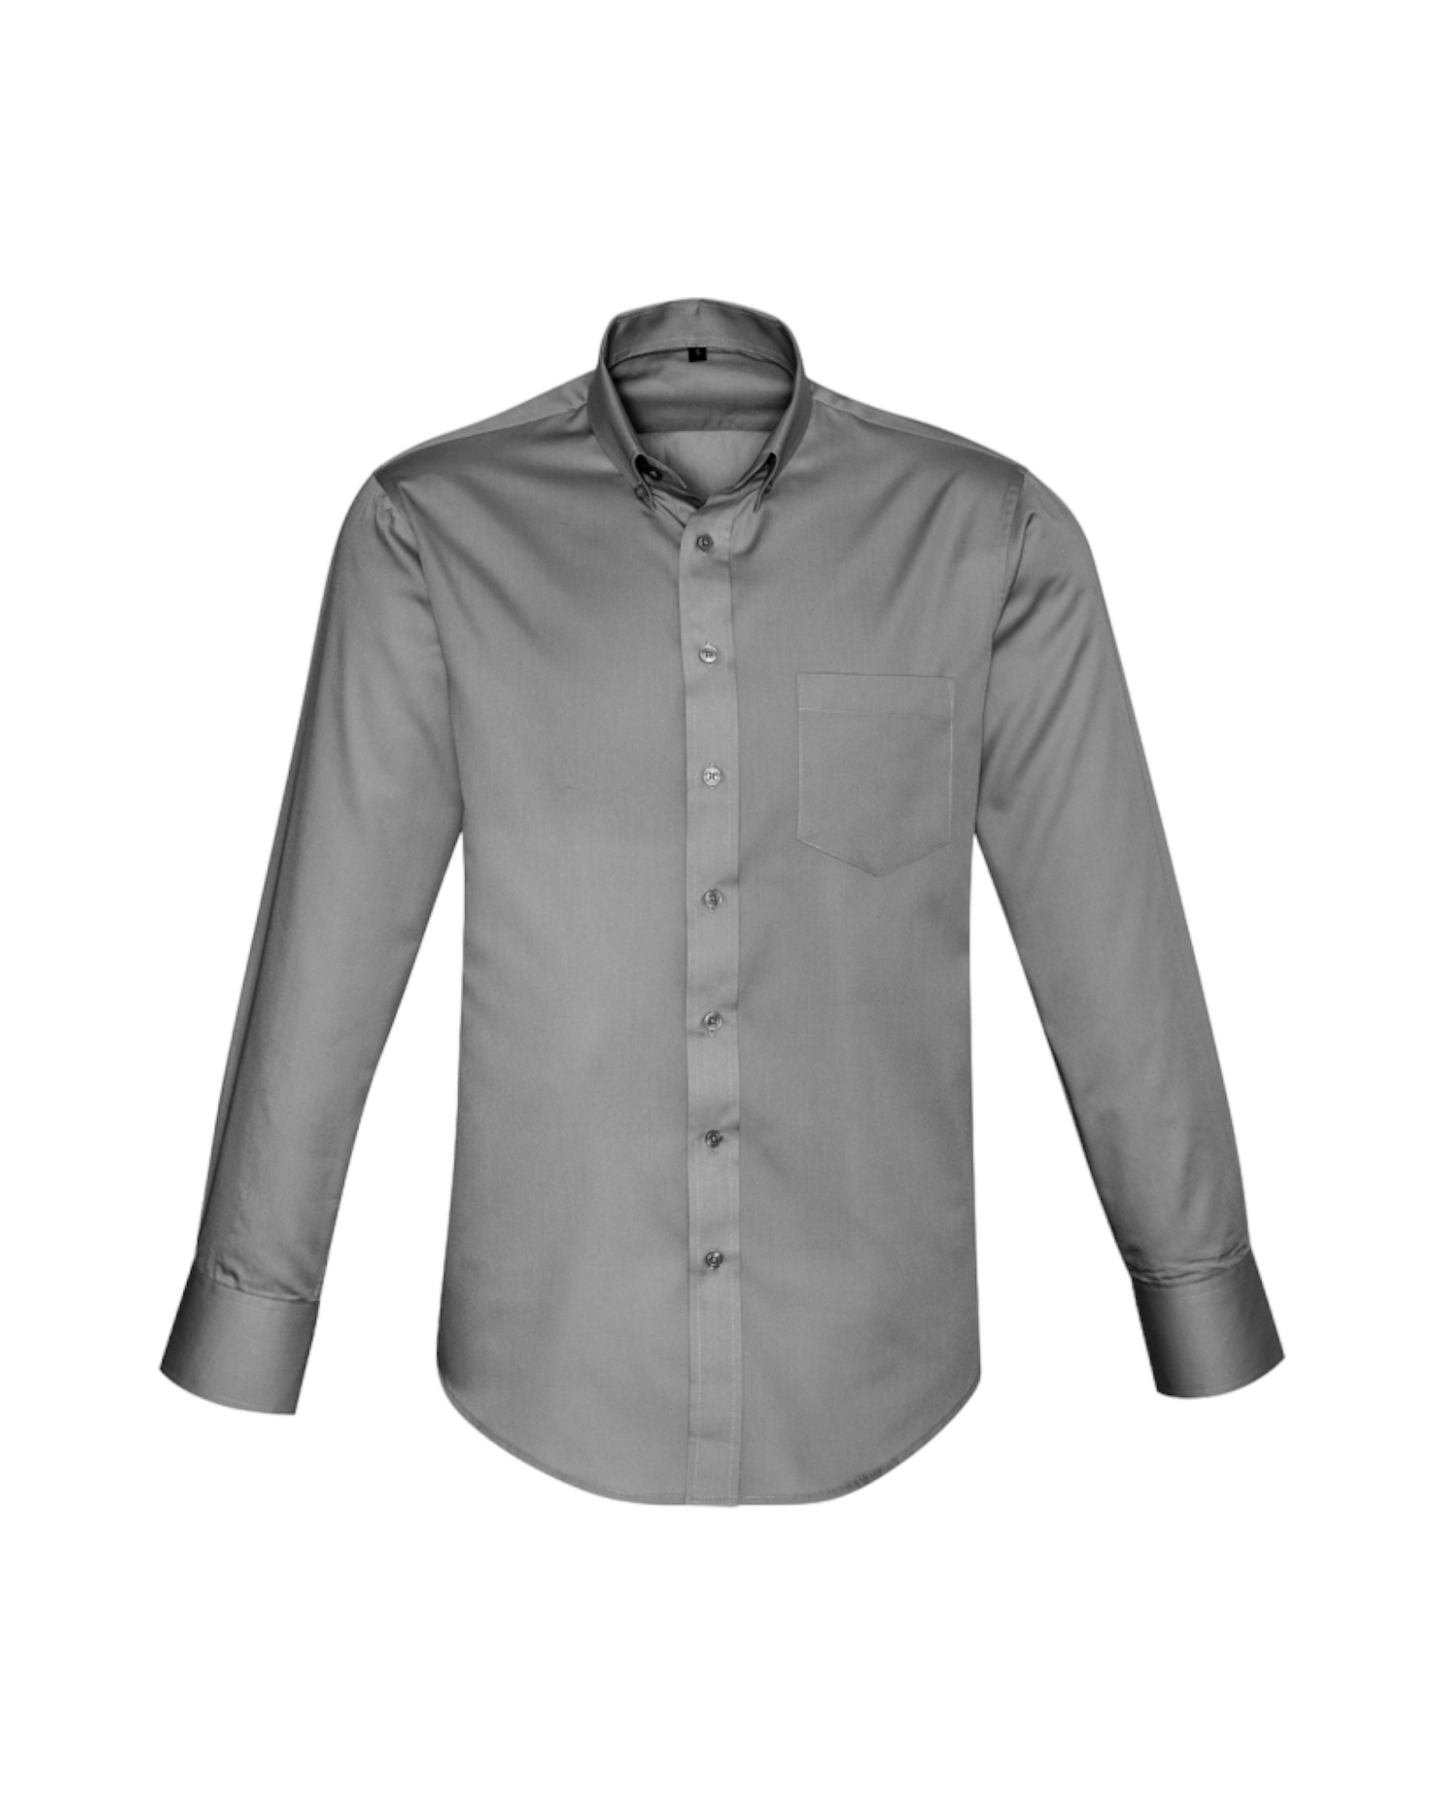 Mens Dalton Long Sleeve Shirt Fashion Biz #S522ML